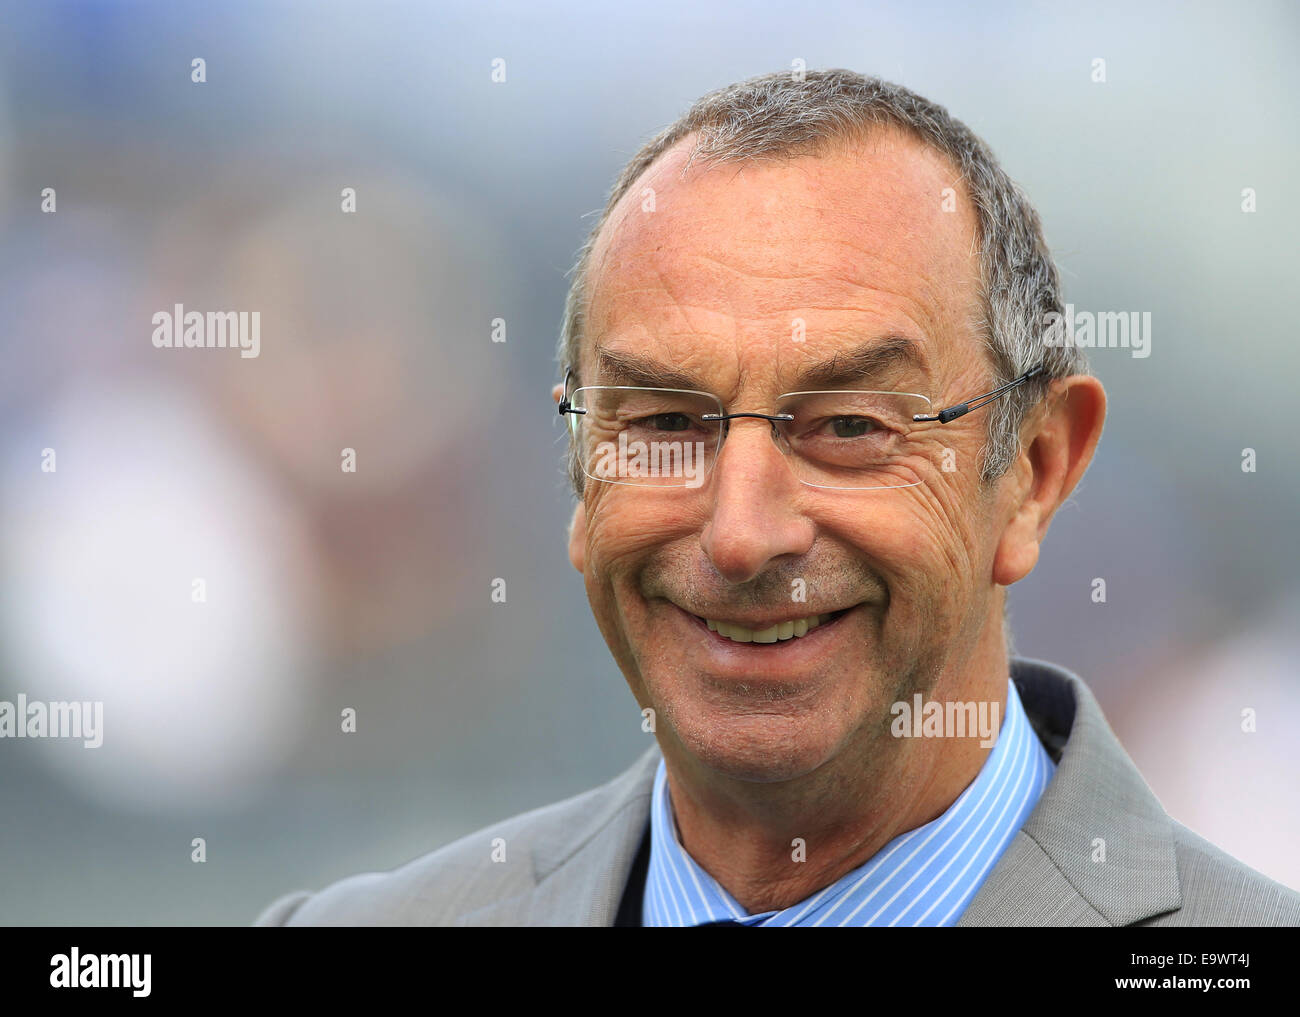 Cricket - Sky Kommentator David "Bumble" Lloyd lächelnden portrait Stockfoto